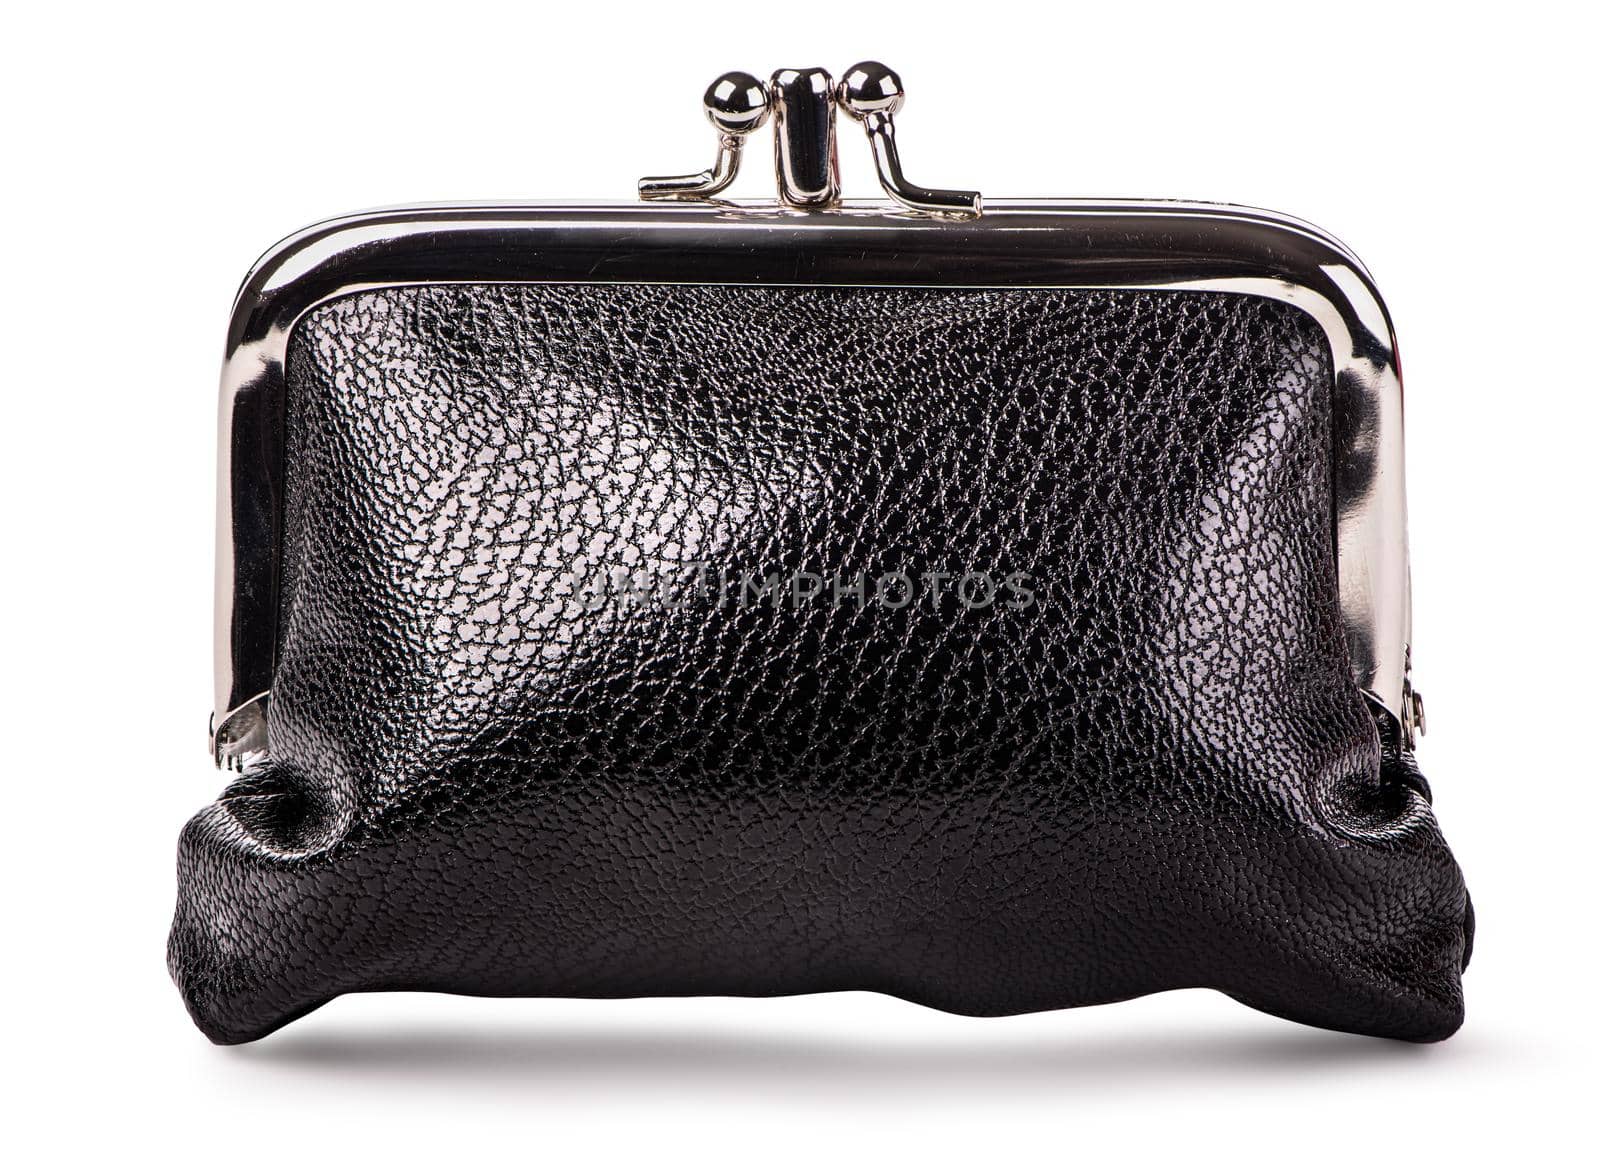 Black leather purse isolated on white background